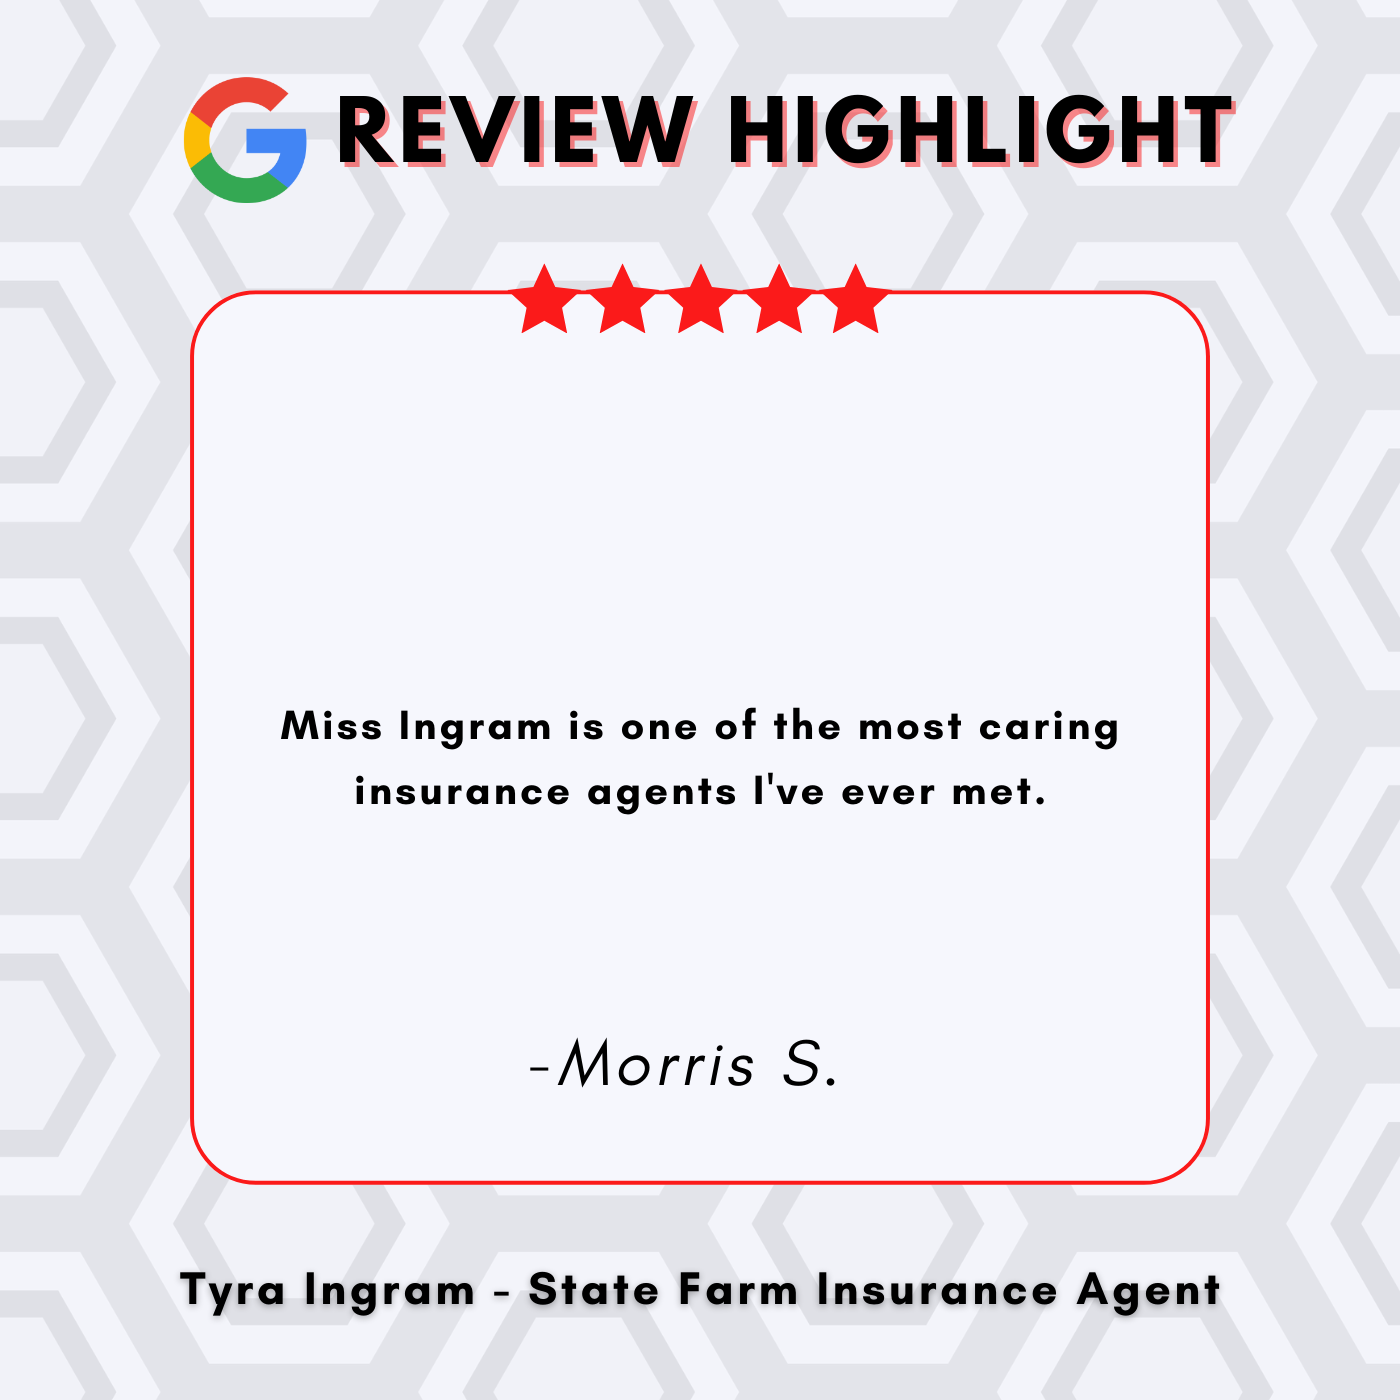 Tyra Ingram - State Farm Insurance Agent